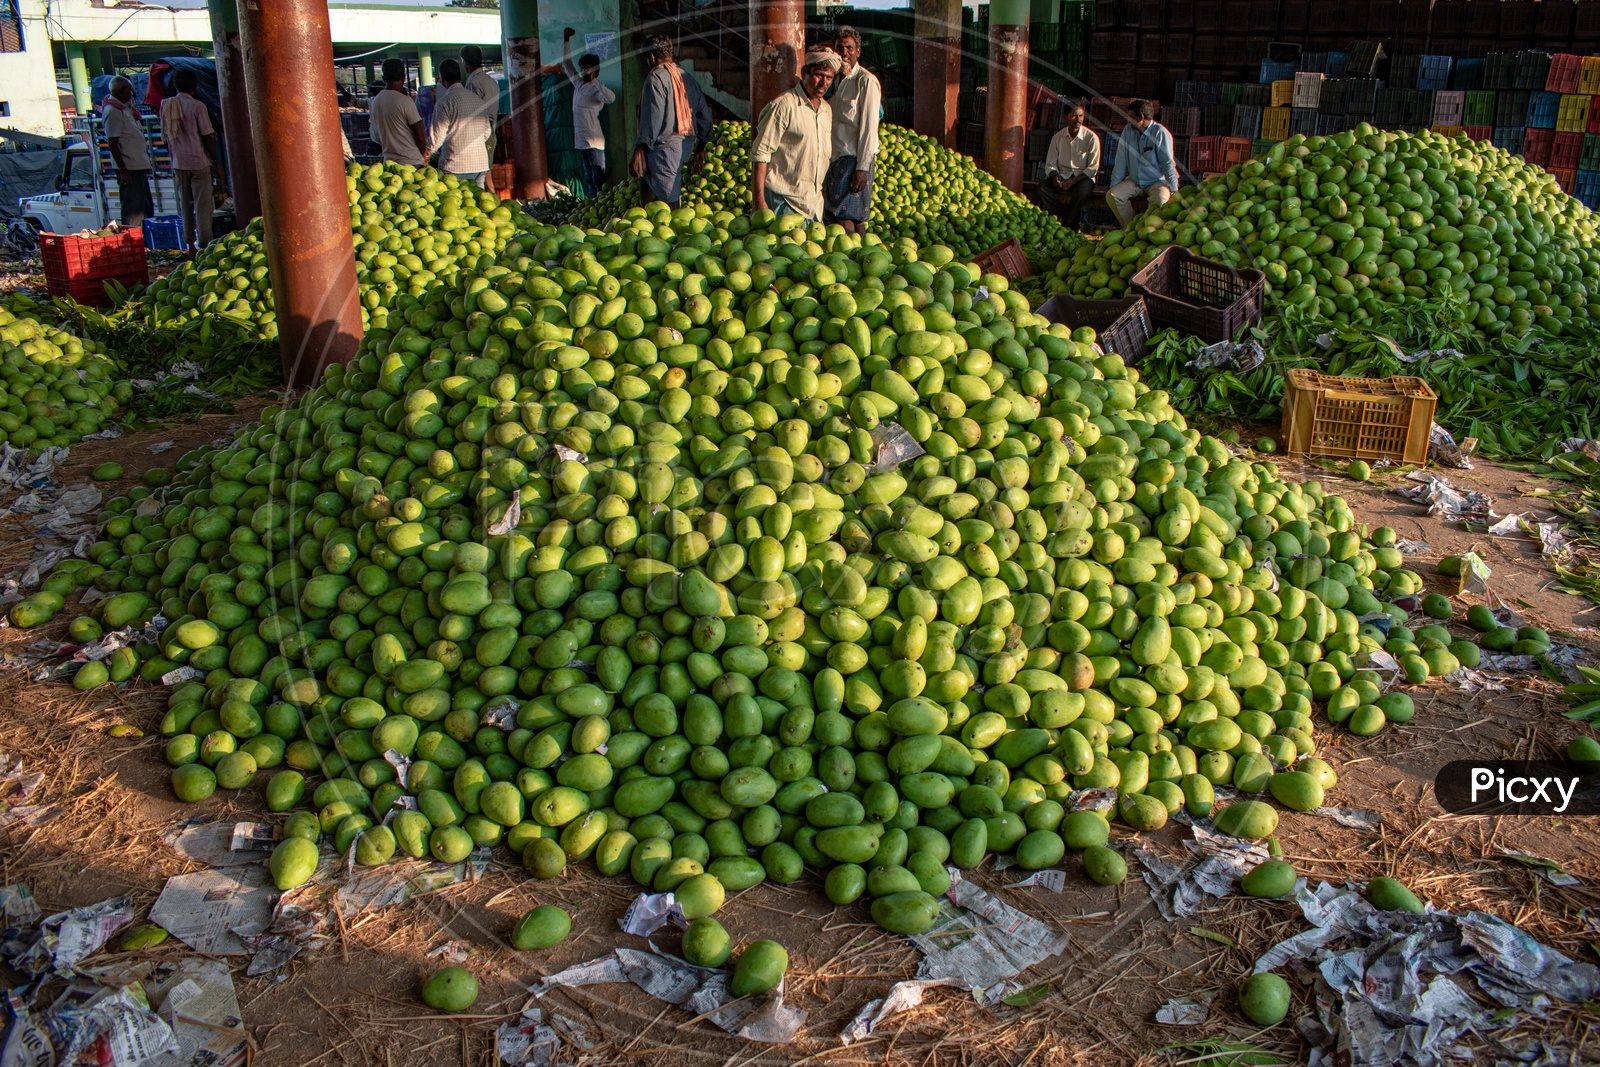 Farmers unloading the mangoes stock at Kothapet fruit market, Hyderabad.